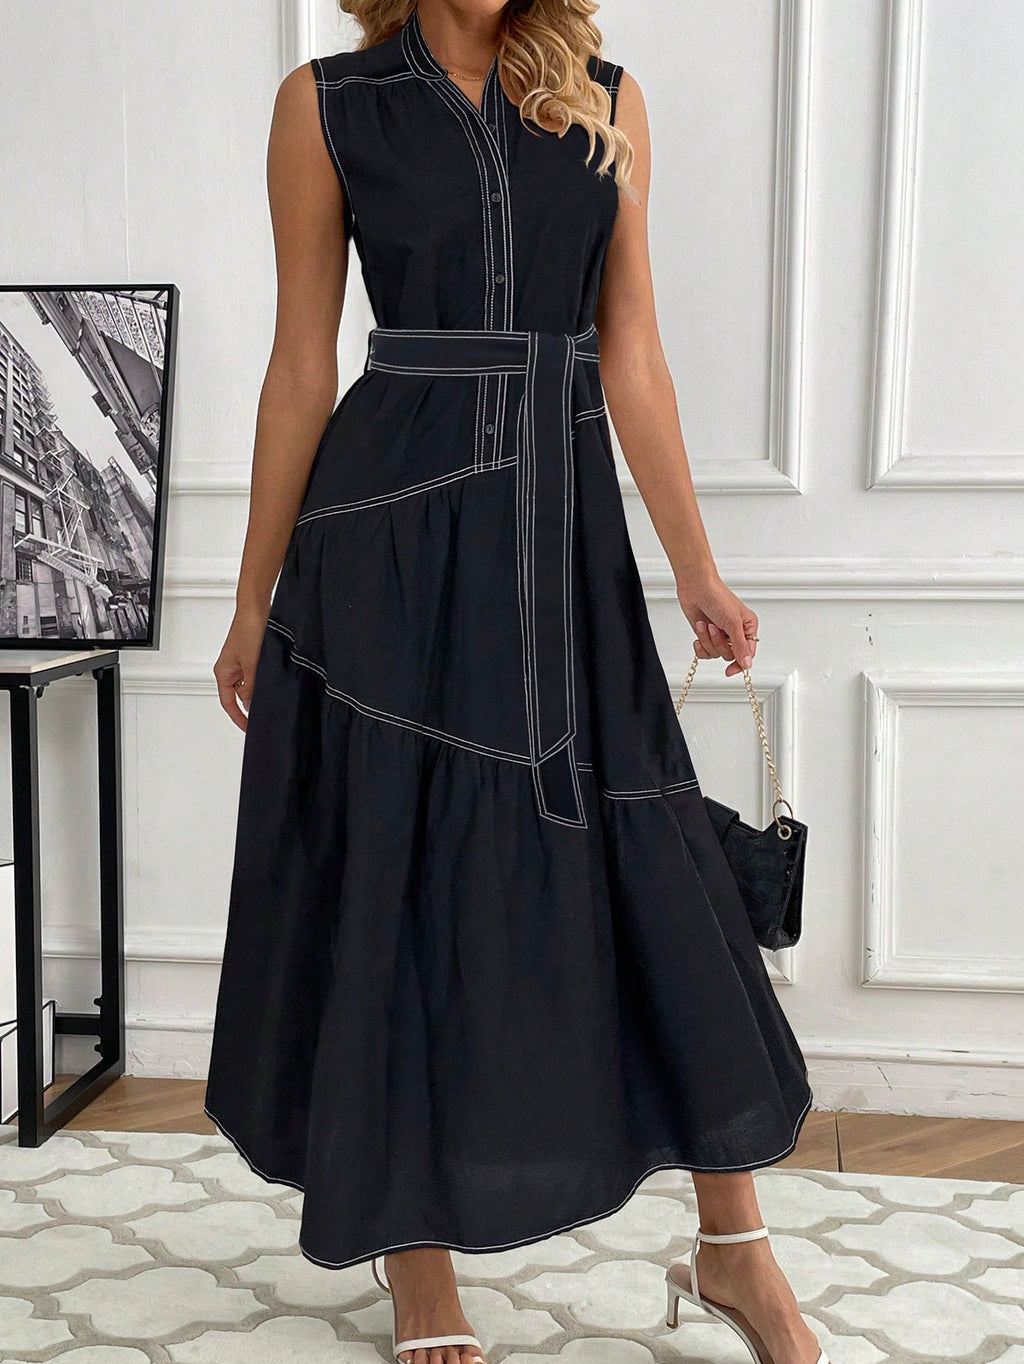 SHEIN Frenchy Women'S Fashion Stitching Belted Dress